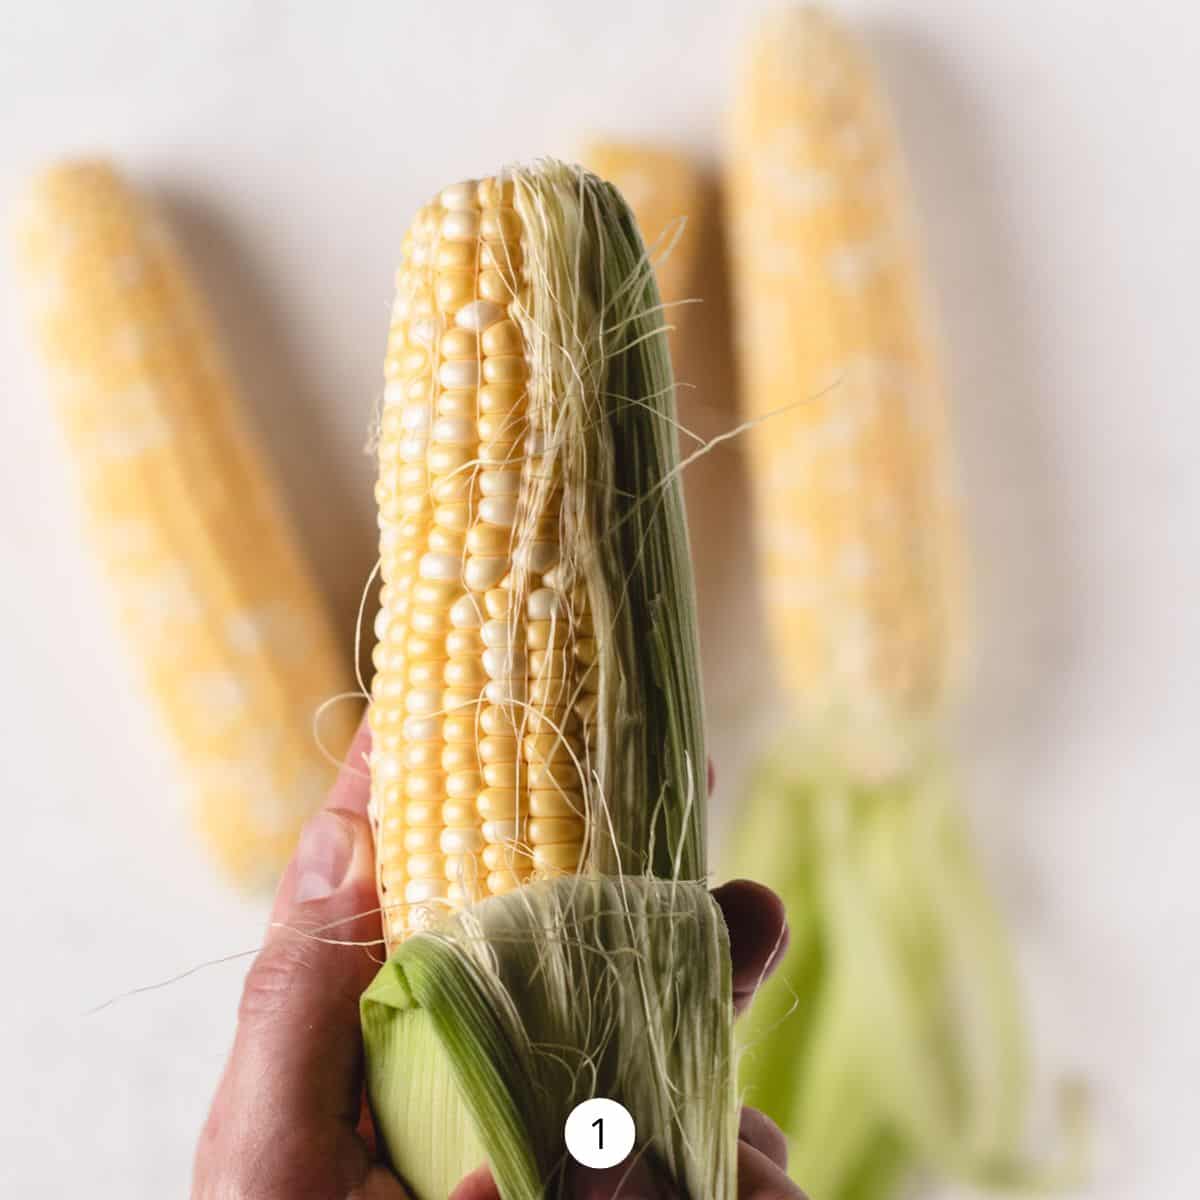 Shucking one ear of corn, by peeling back the husk.